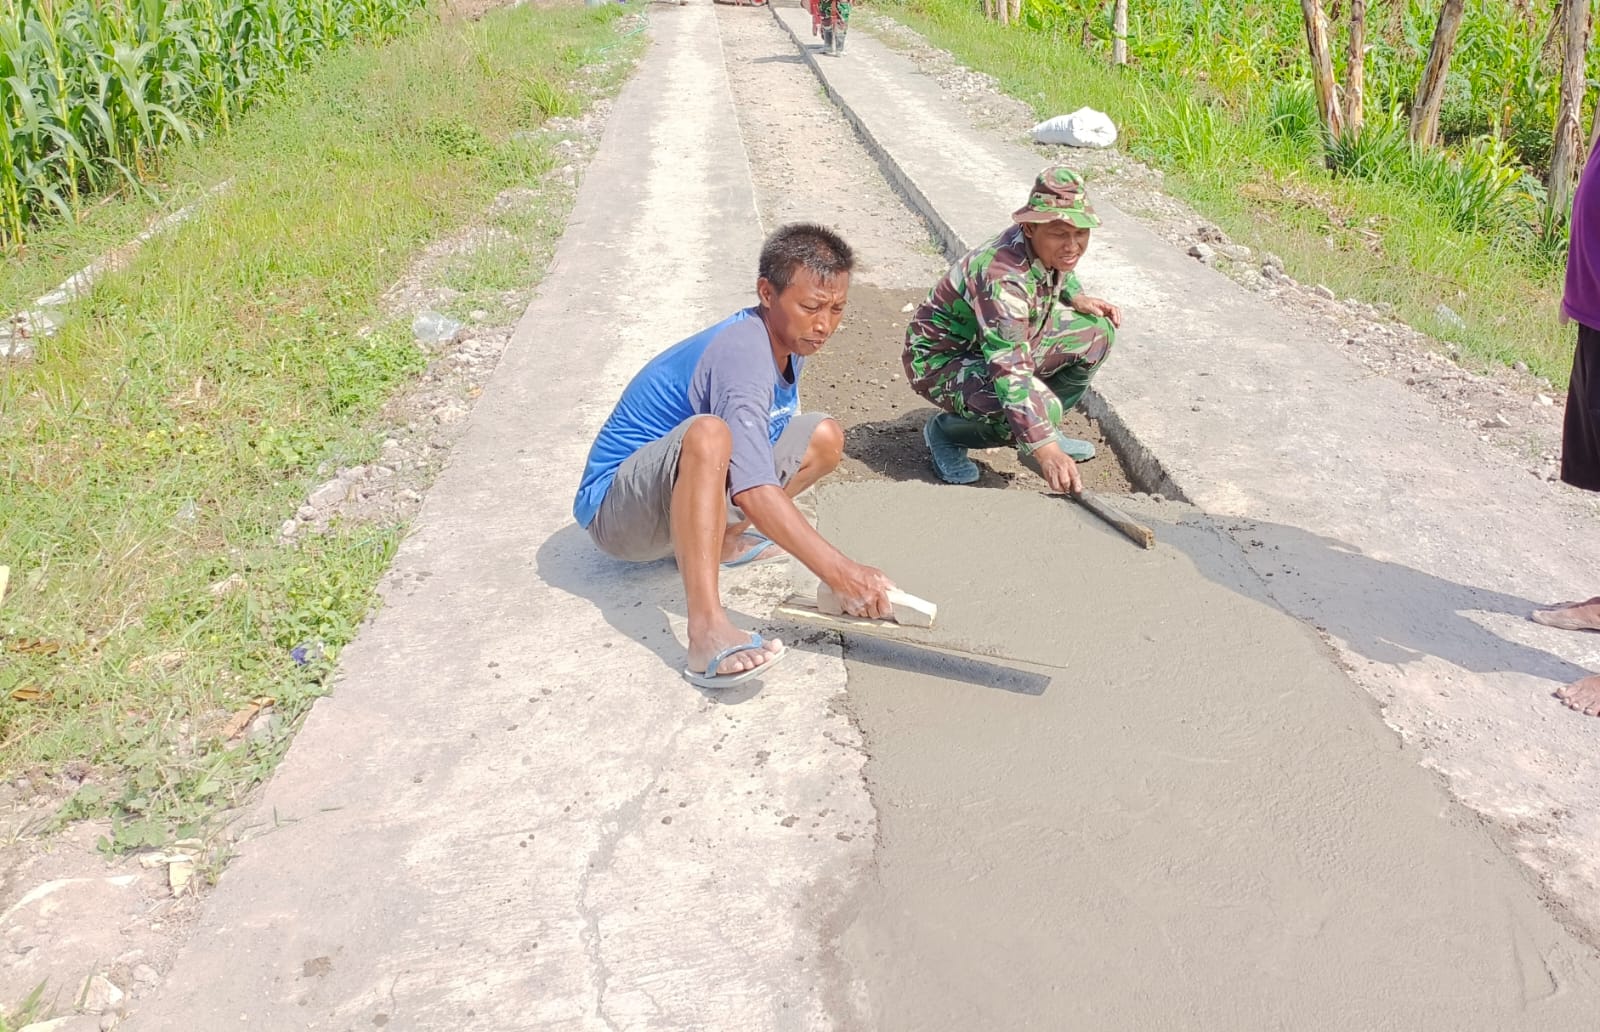 Dukung Pembangunan Wilayah Binaan, Babinsa Bersama Warga Gotong Royong Pengecoran jalan